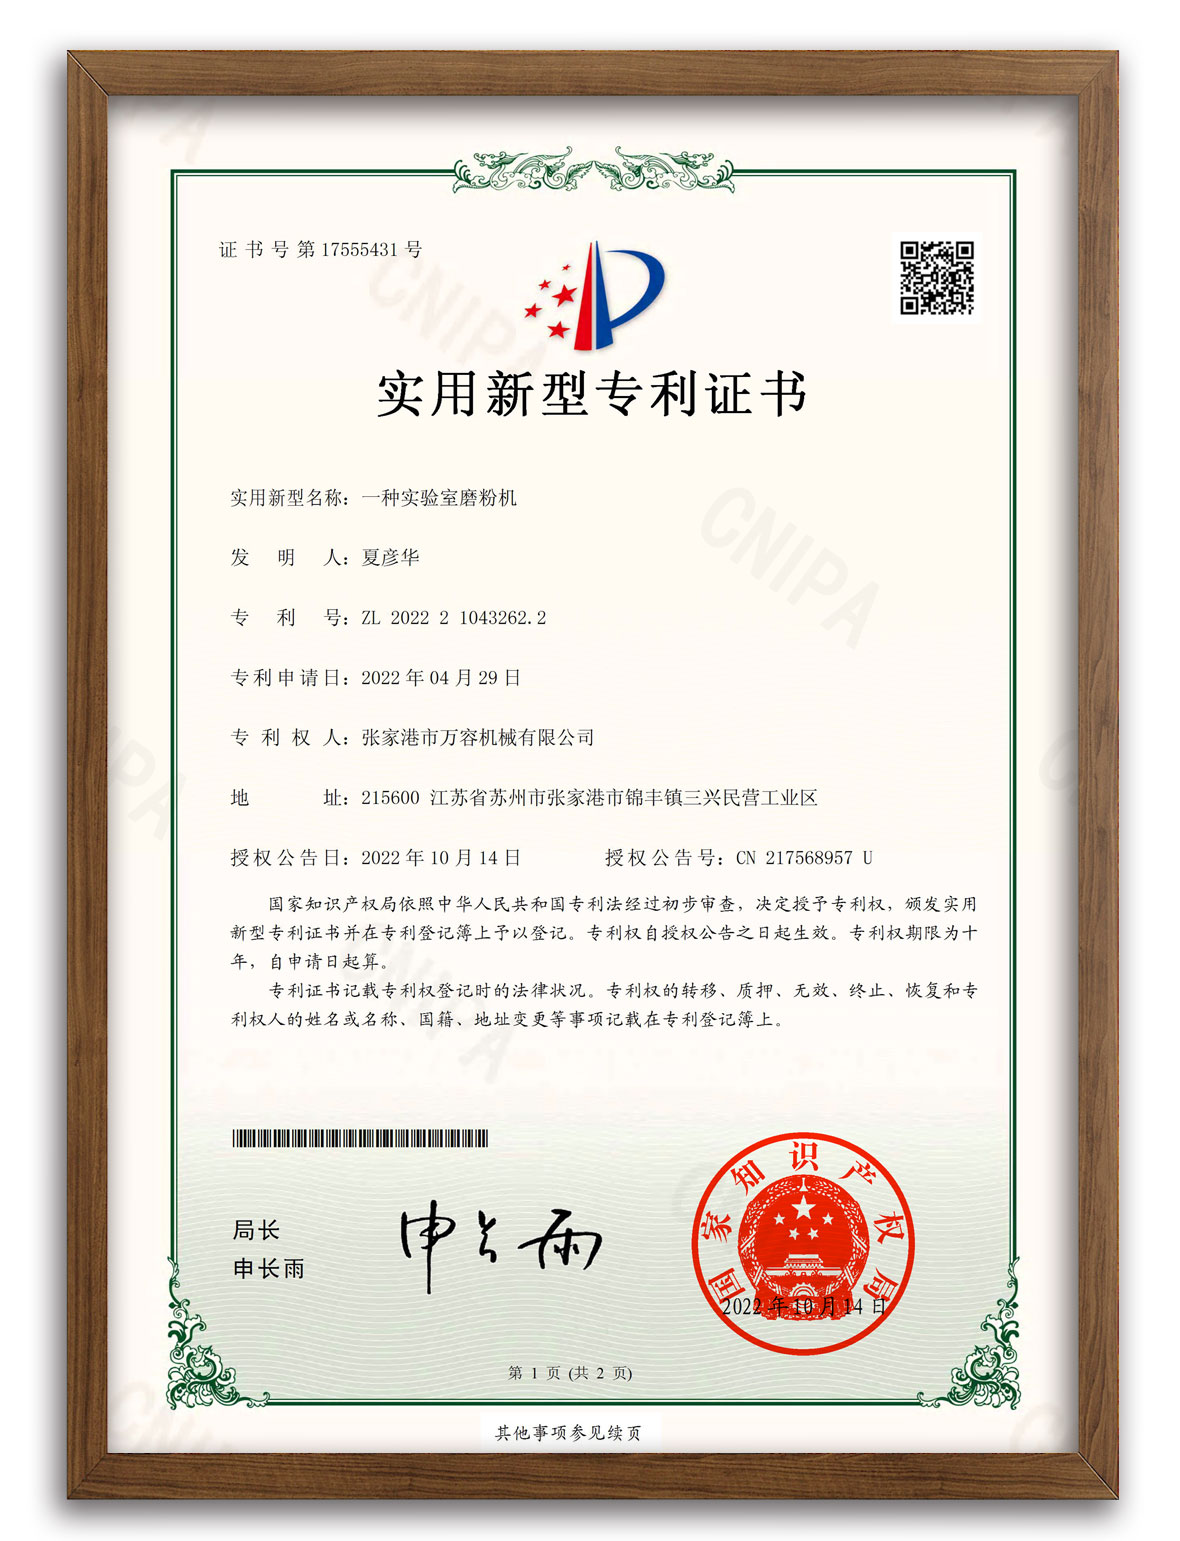 Lab Pulverizer Utility Model Patent Certificate